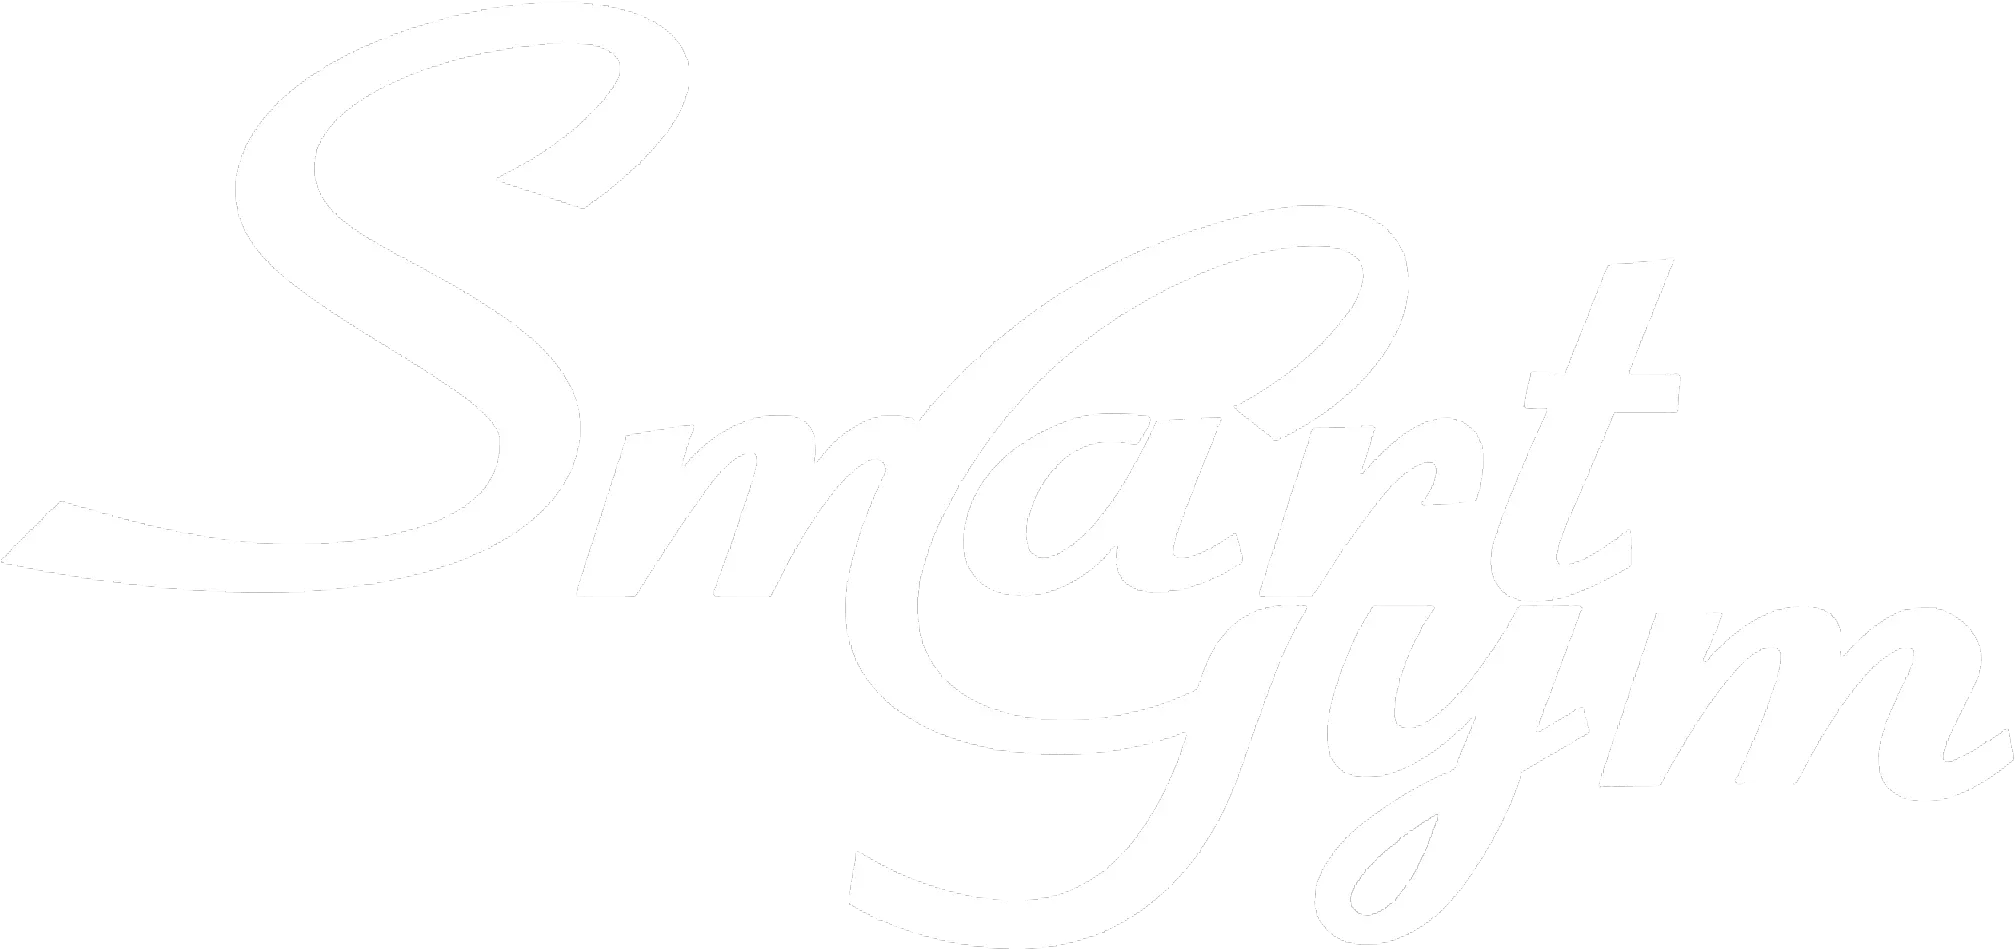 Smart Gym Happy Eid From Gym Png Gym Logos